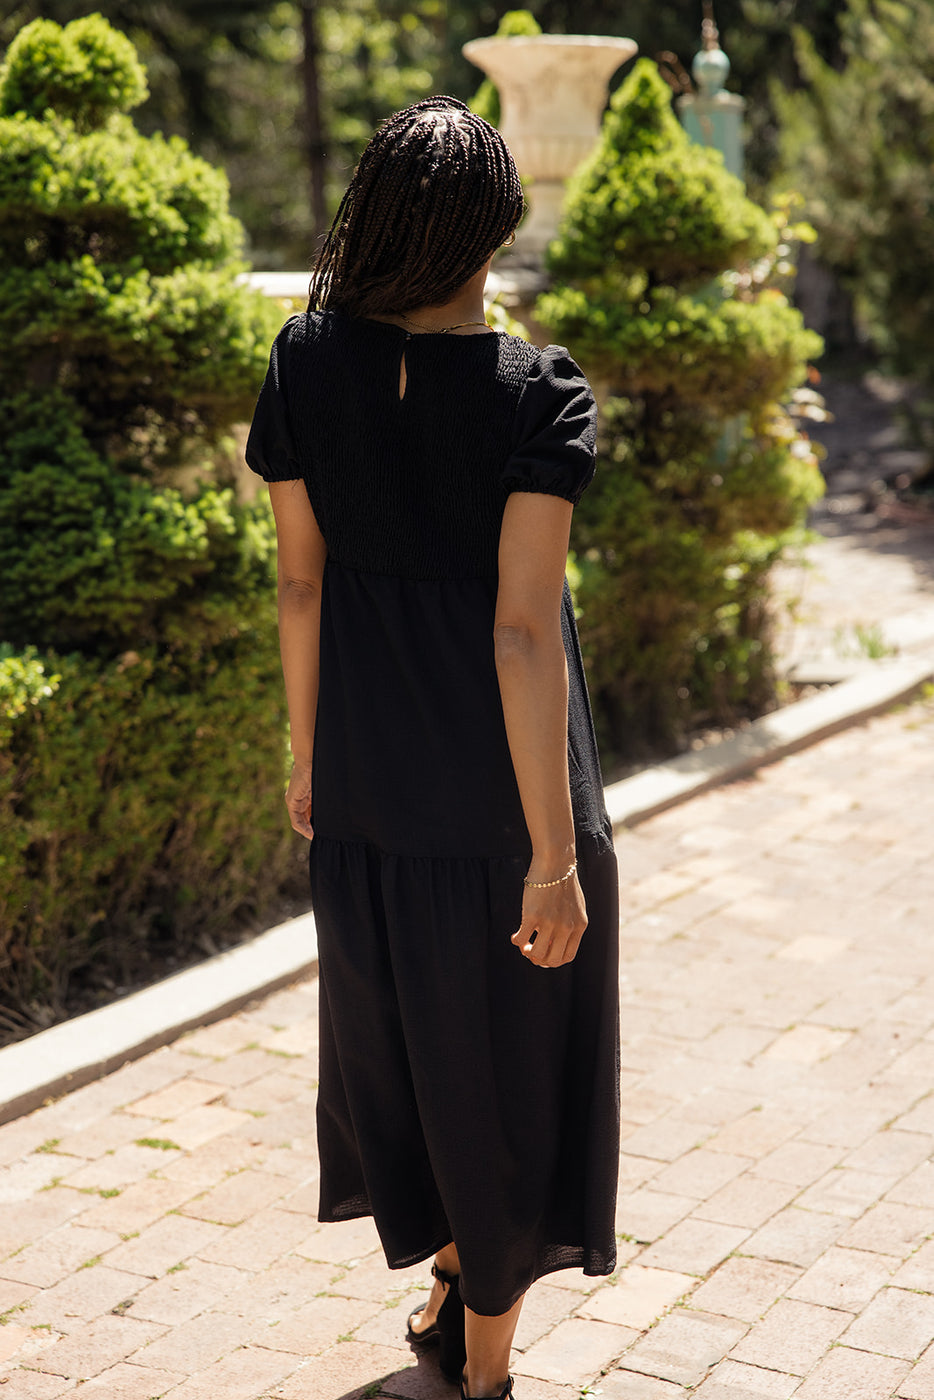 a woman in a black dress